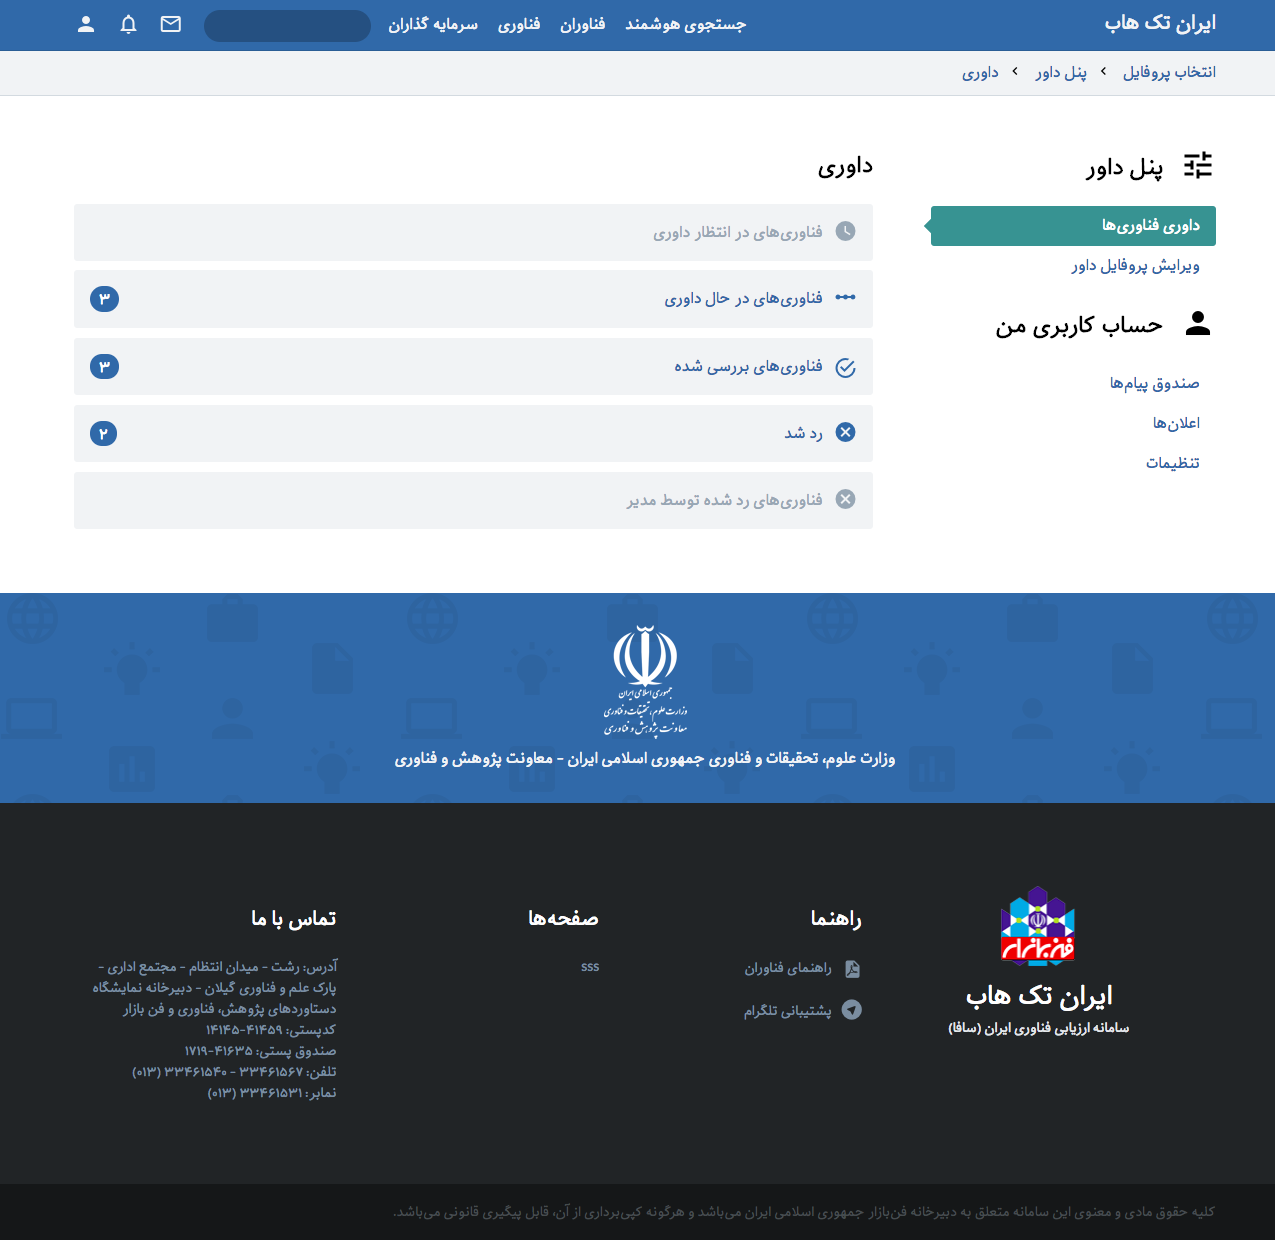 Iran TechHub by Pouya Saadeghi - /projects/M7HMjYXNlnYVNBW2wriPp8Ft3oyM8Lsd.png